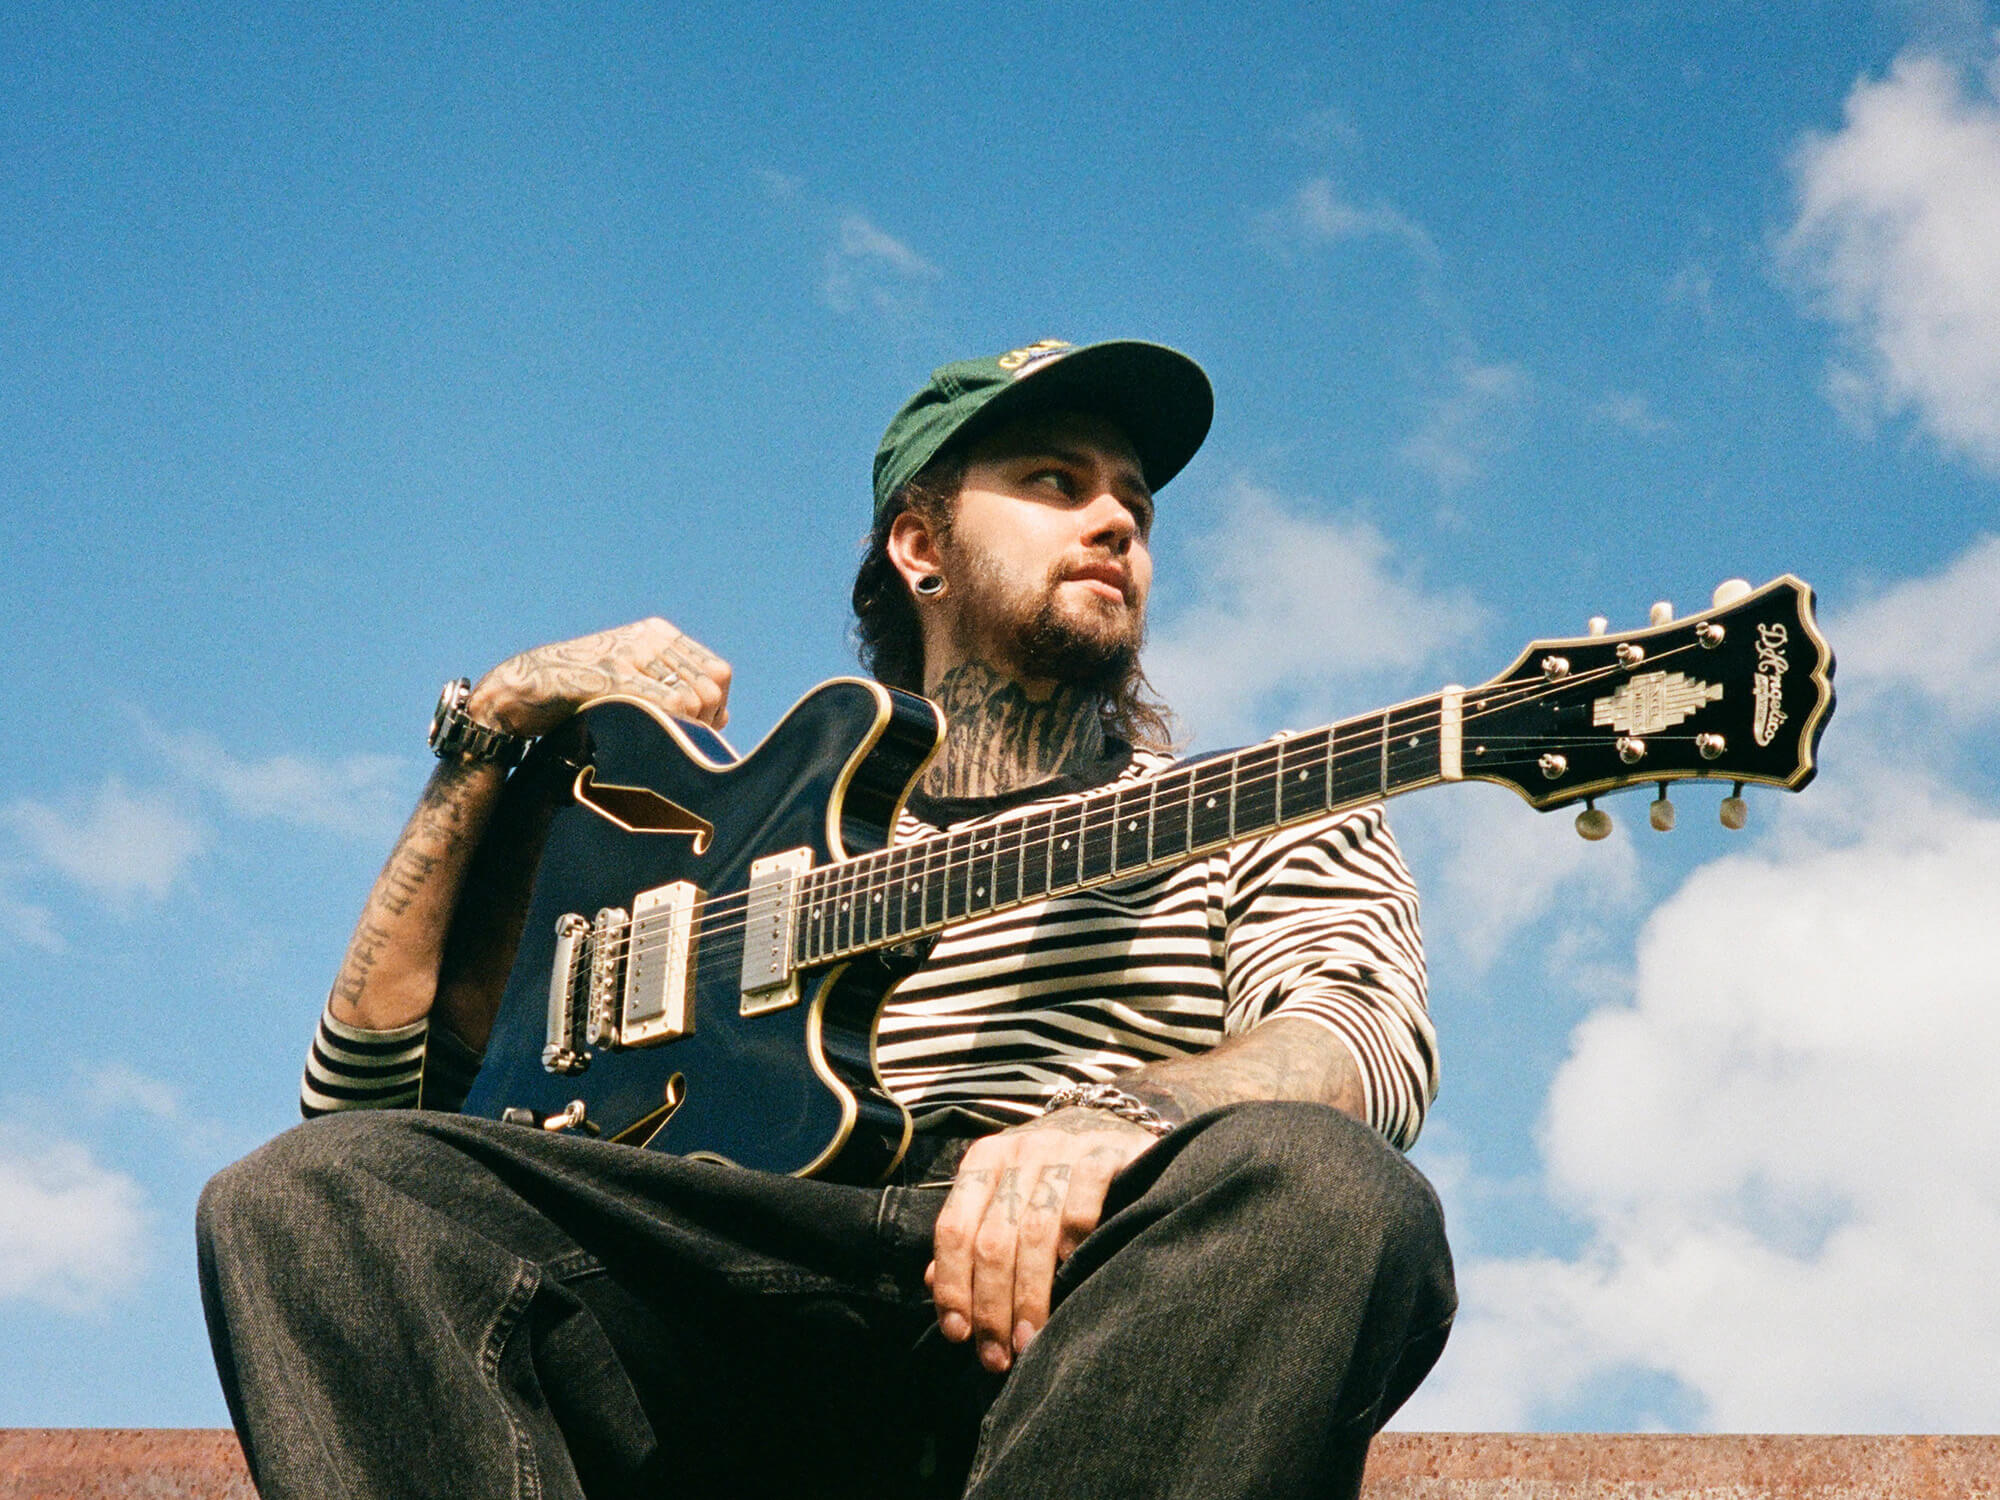 Roman Bulakhov photographed with a guitar against a blue sky, photo by Kostya Borovski